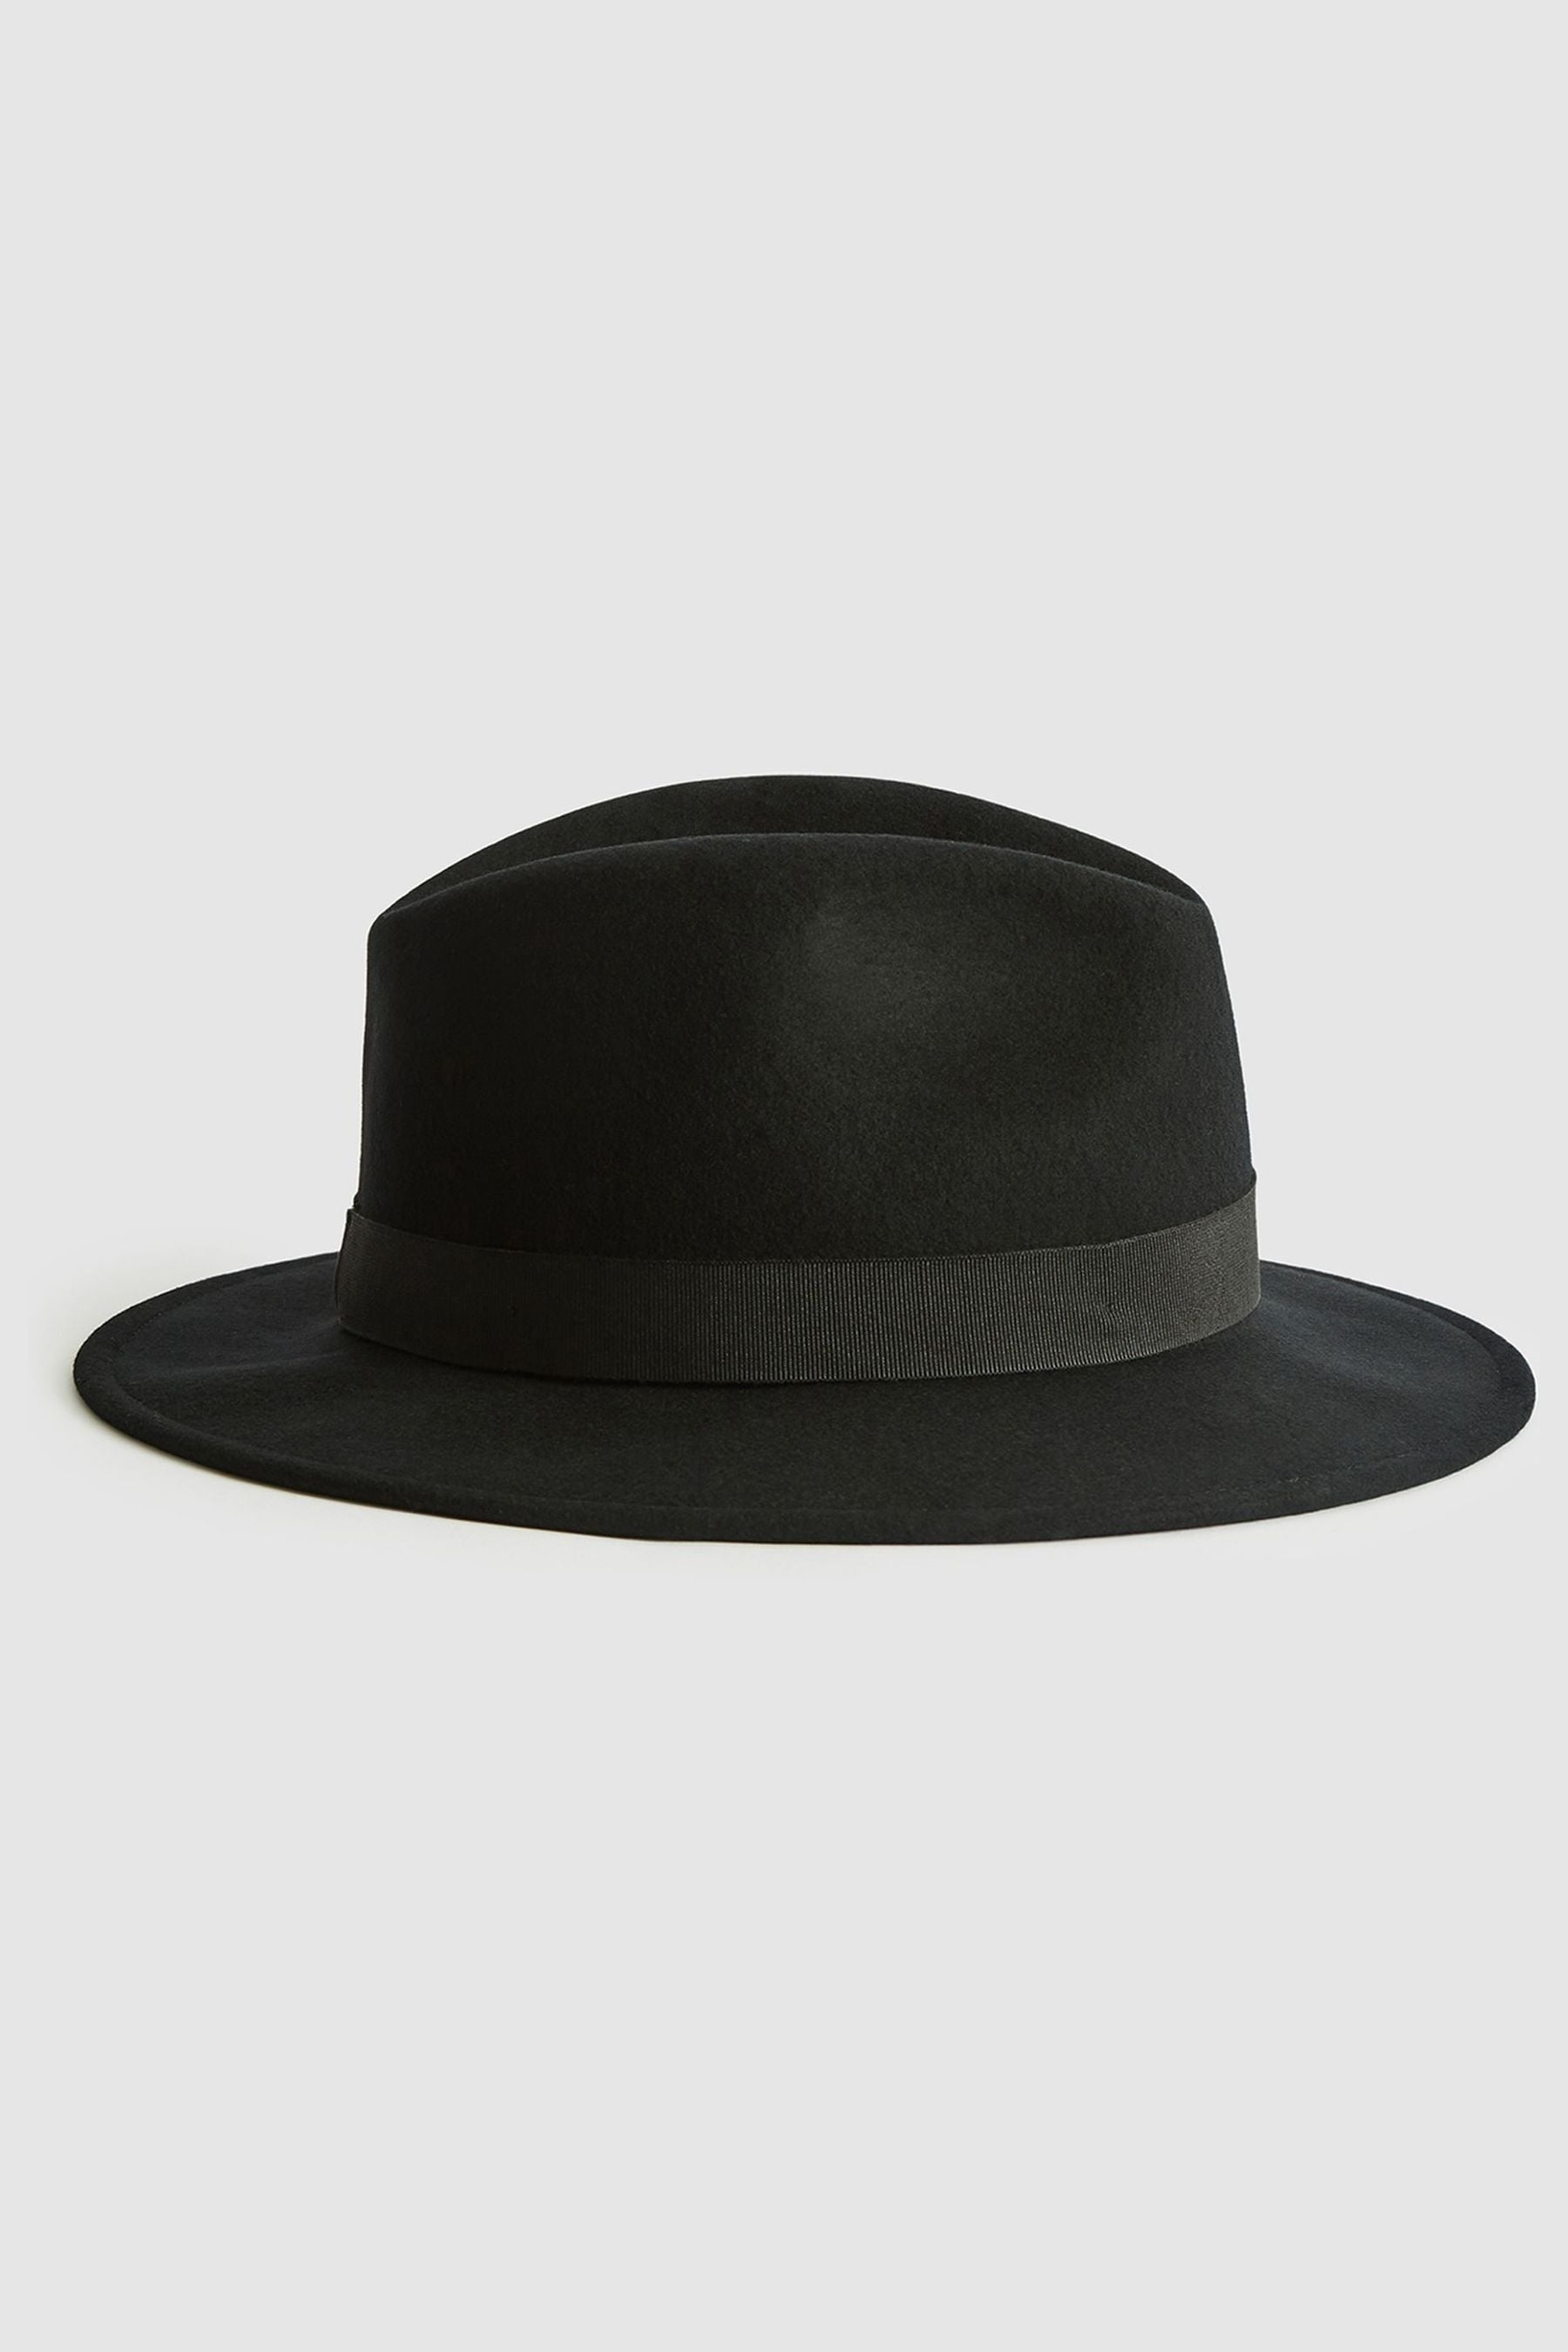 Reiss Ashbourne - Black Wool Fedora Hat, M-l